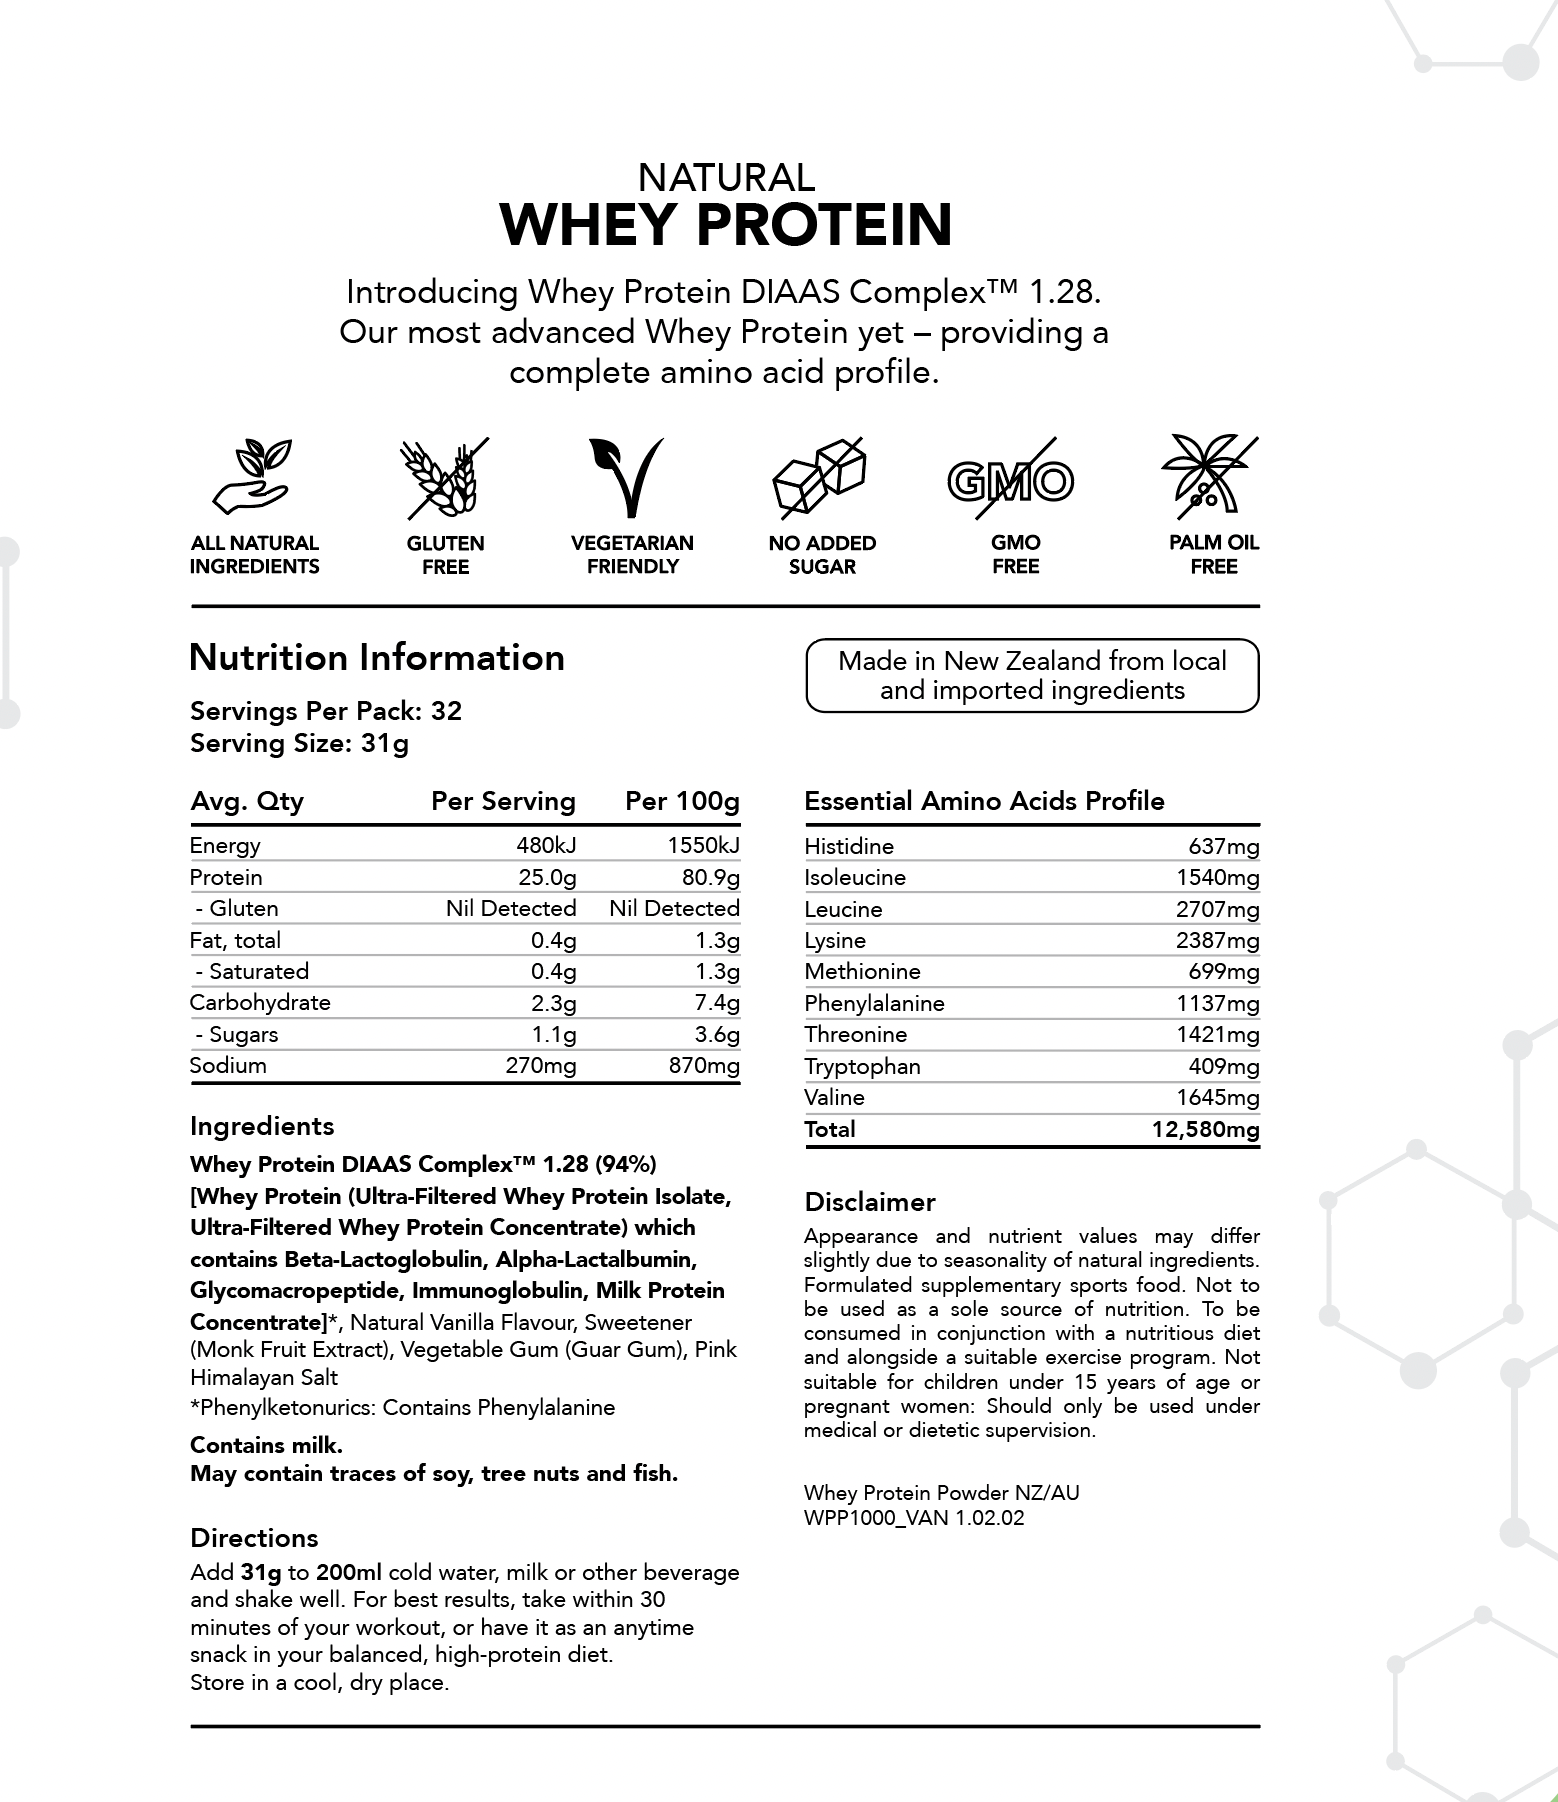 Radix Nutrition - Whey Protein DIAAS Complex™ 1.61 in vanilla flavour